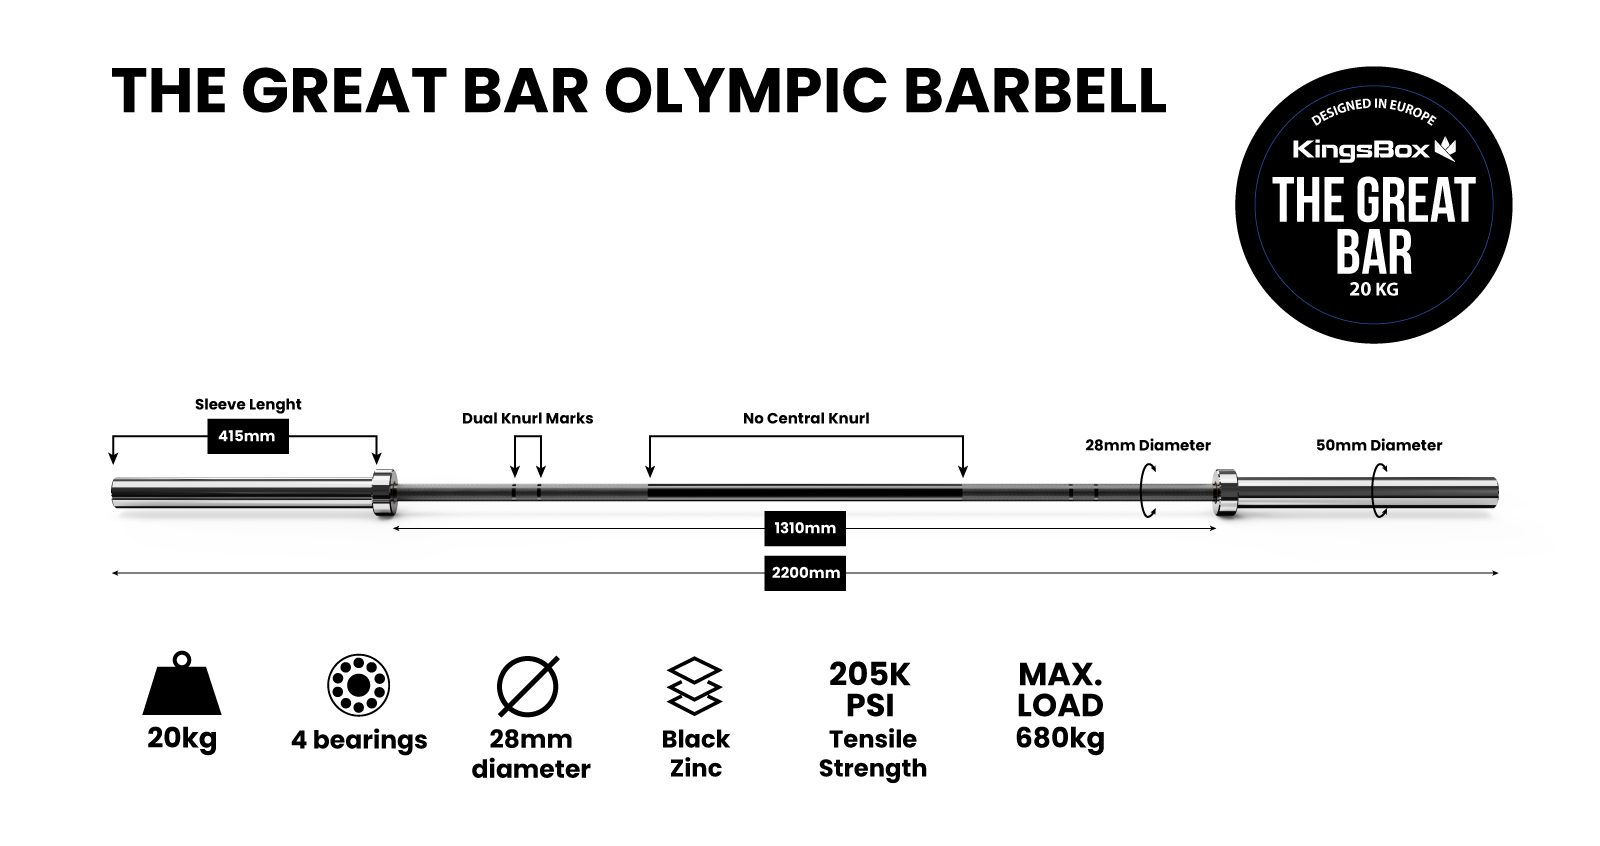 BARRE OLYMPIQUE GREAT BAR | KingsBox